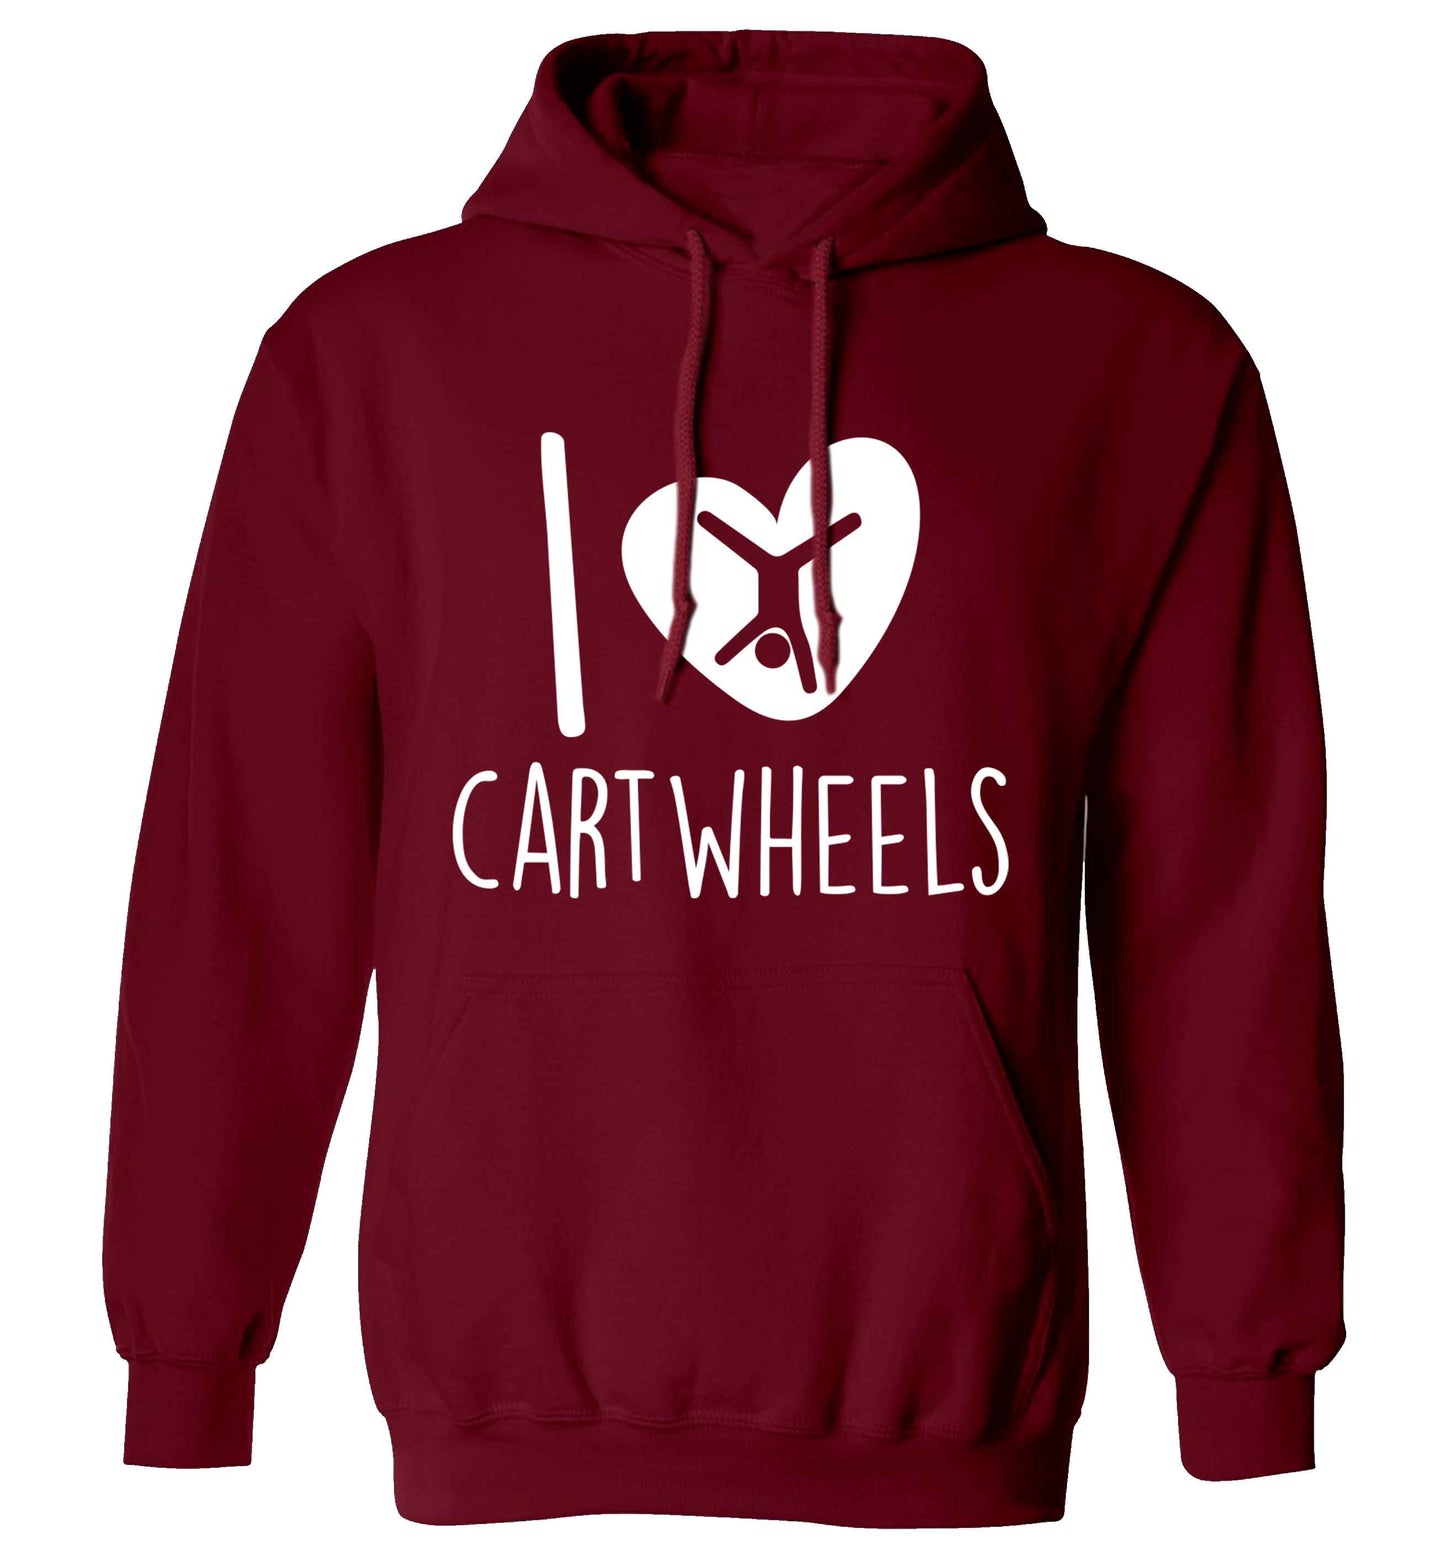 I love cartwheels adults unisex maroon hoodie 2XL